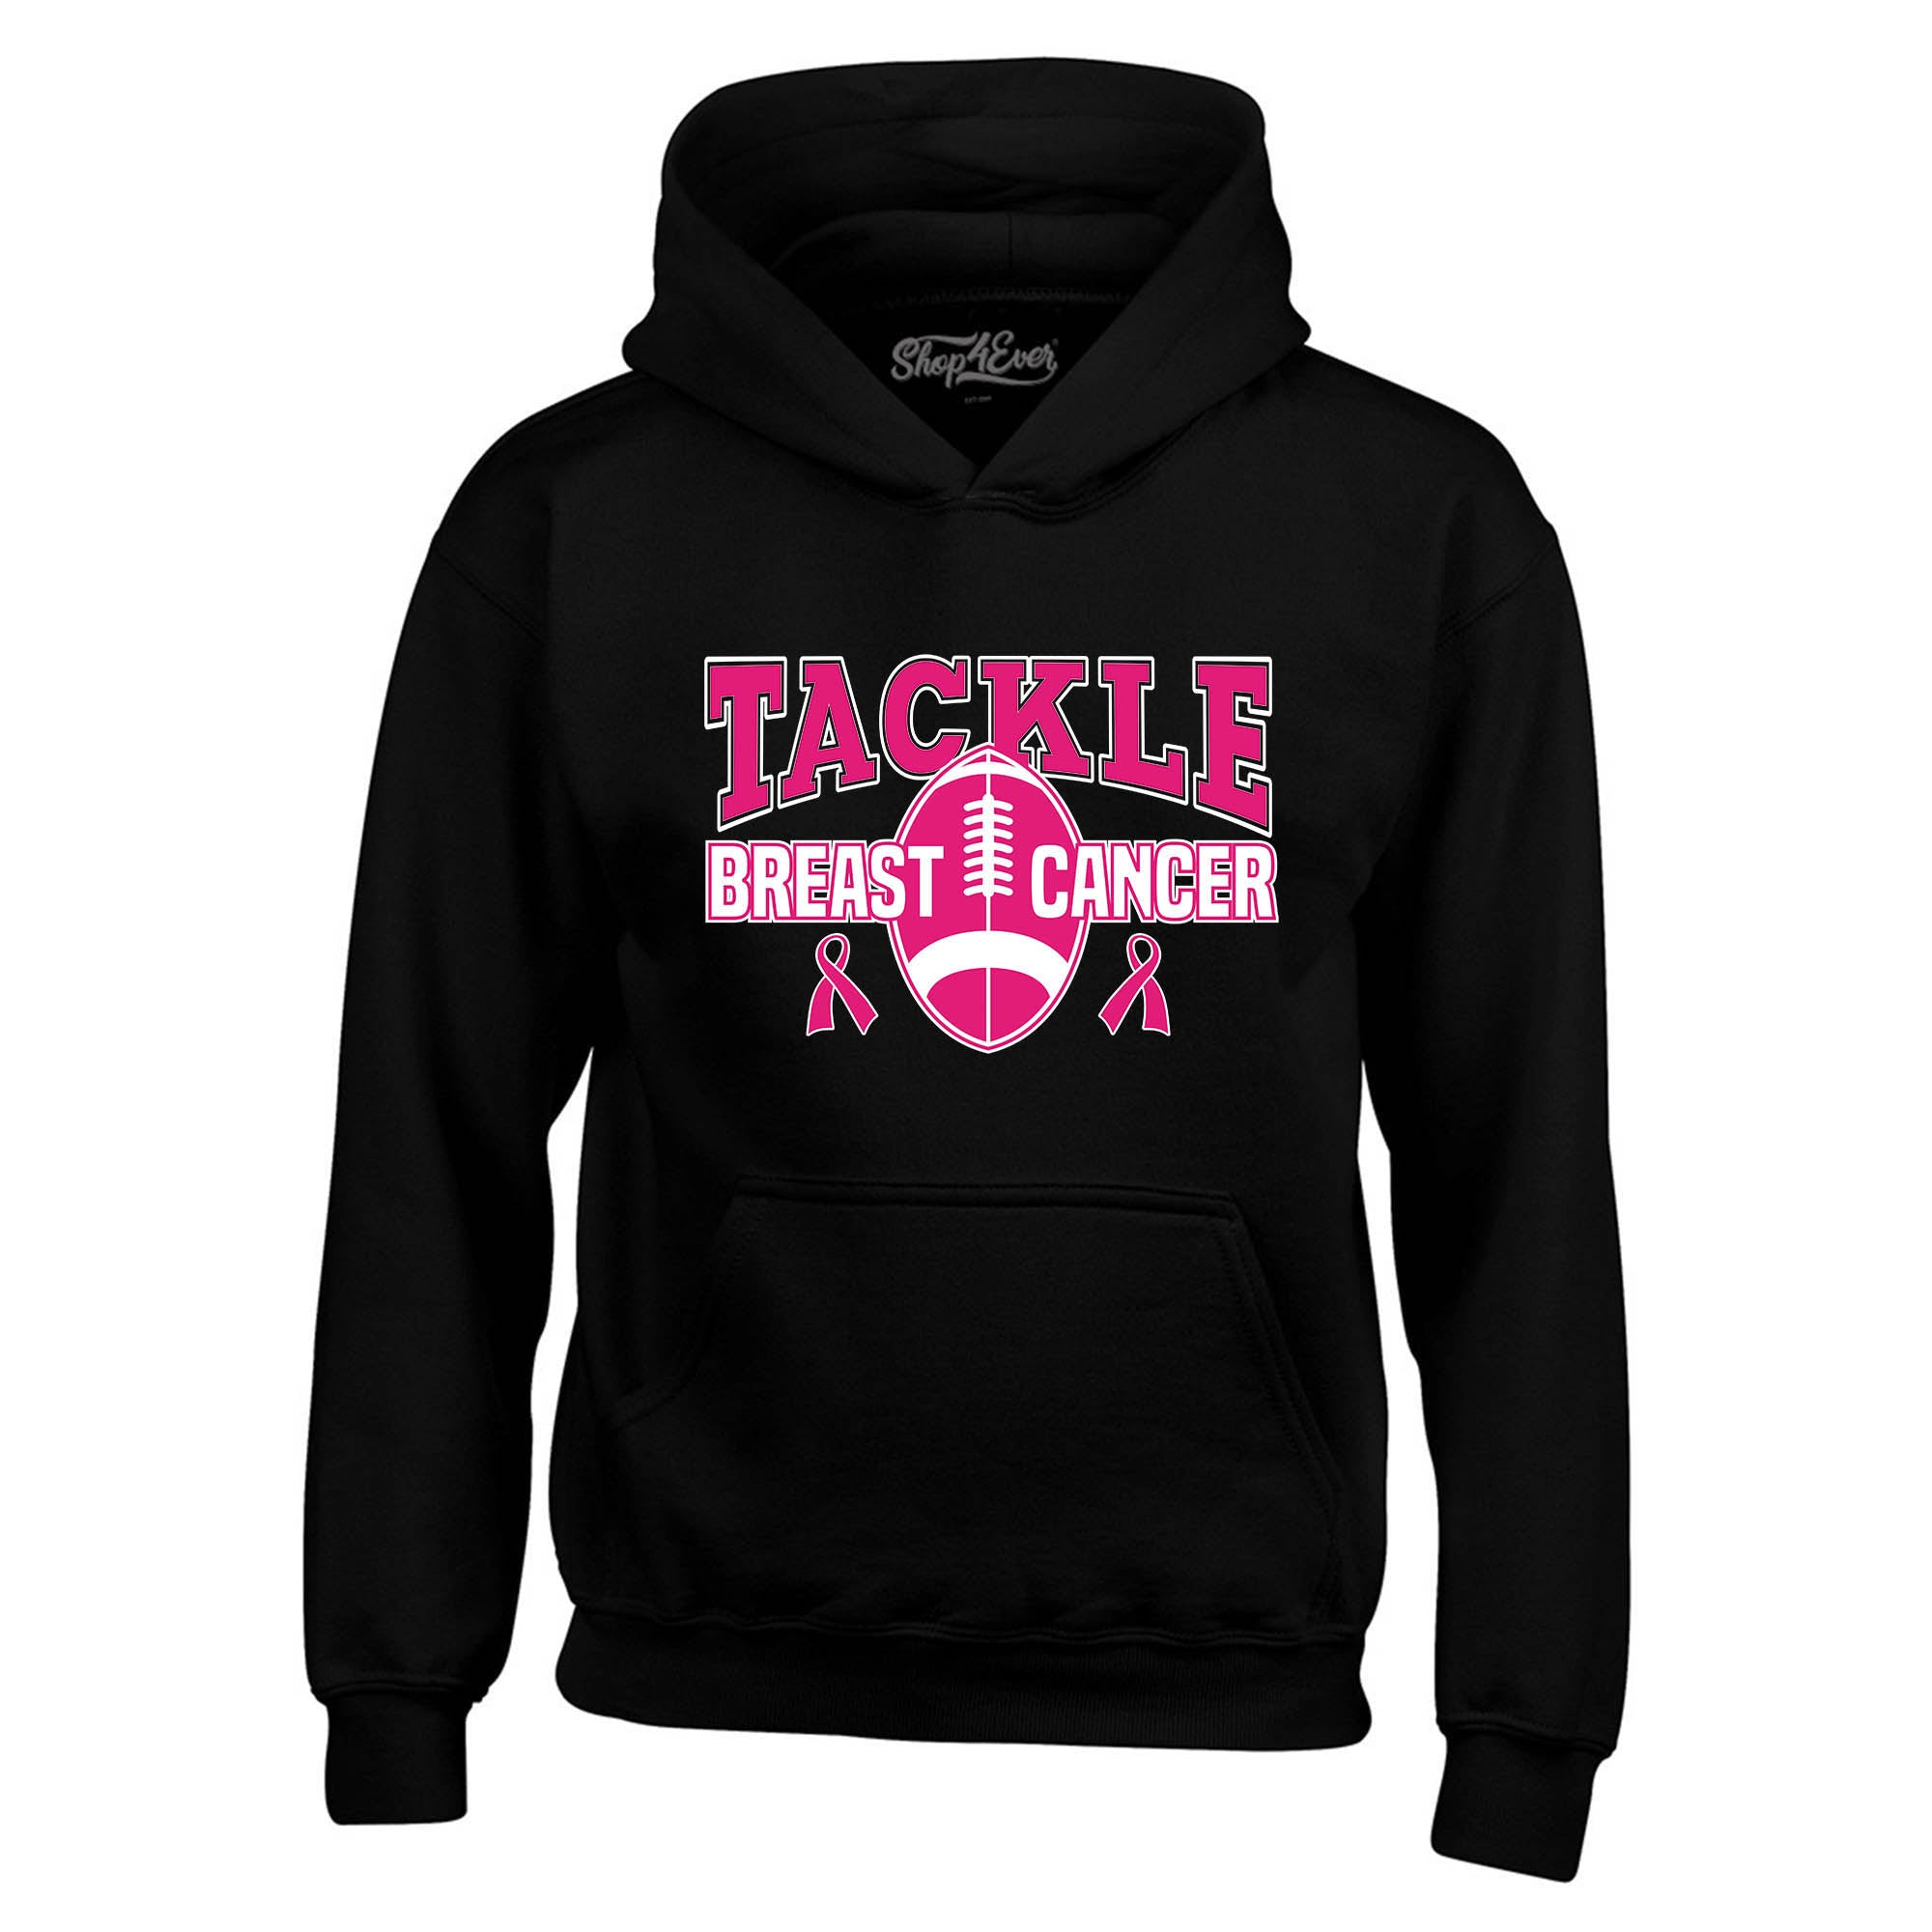 Tackle Breast Cancer Awareness Hoodie Sweatshirts